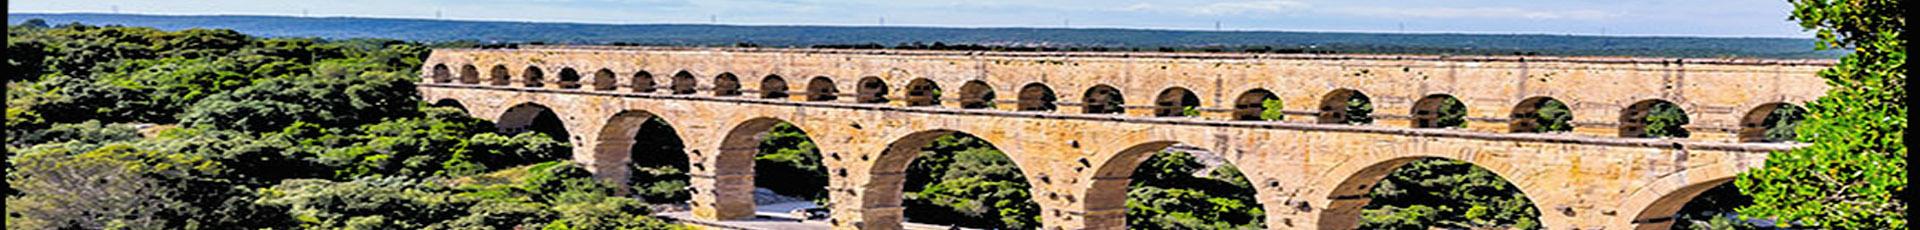 photo du pont du Gard